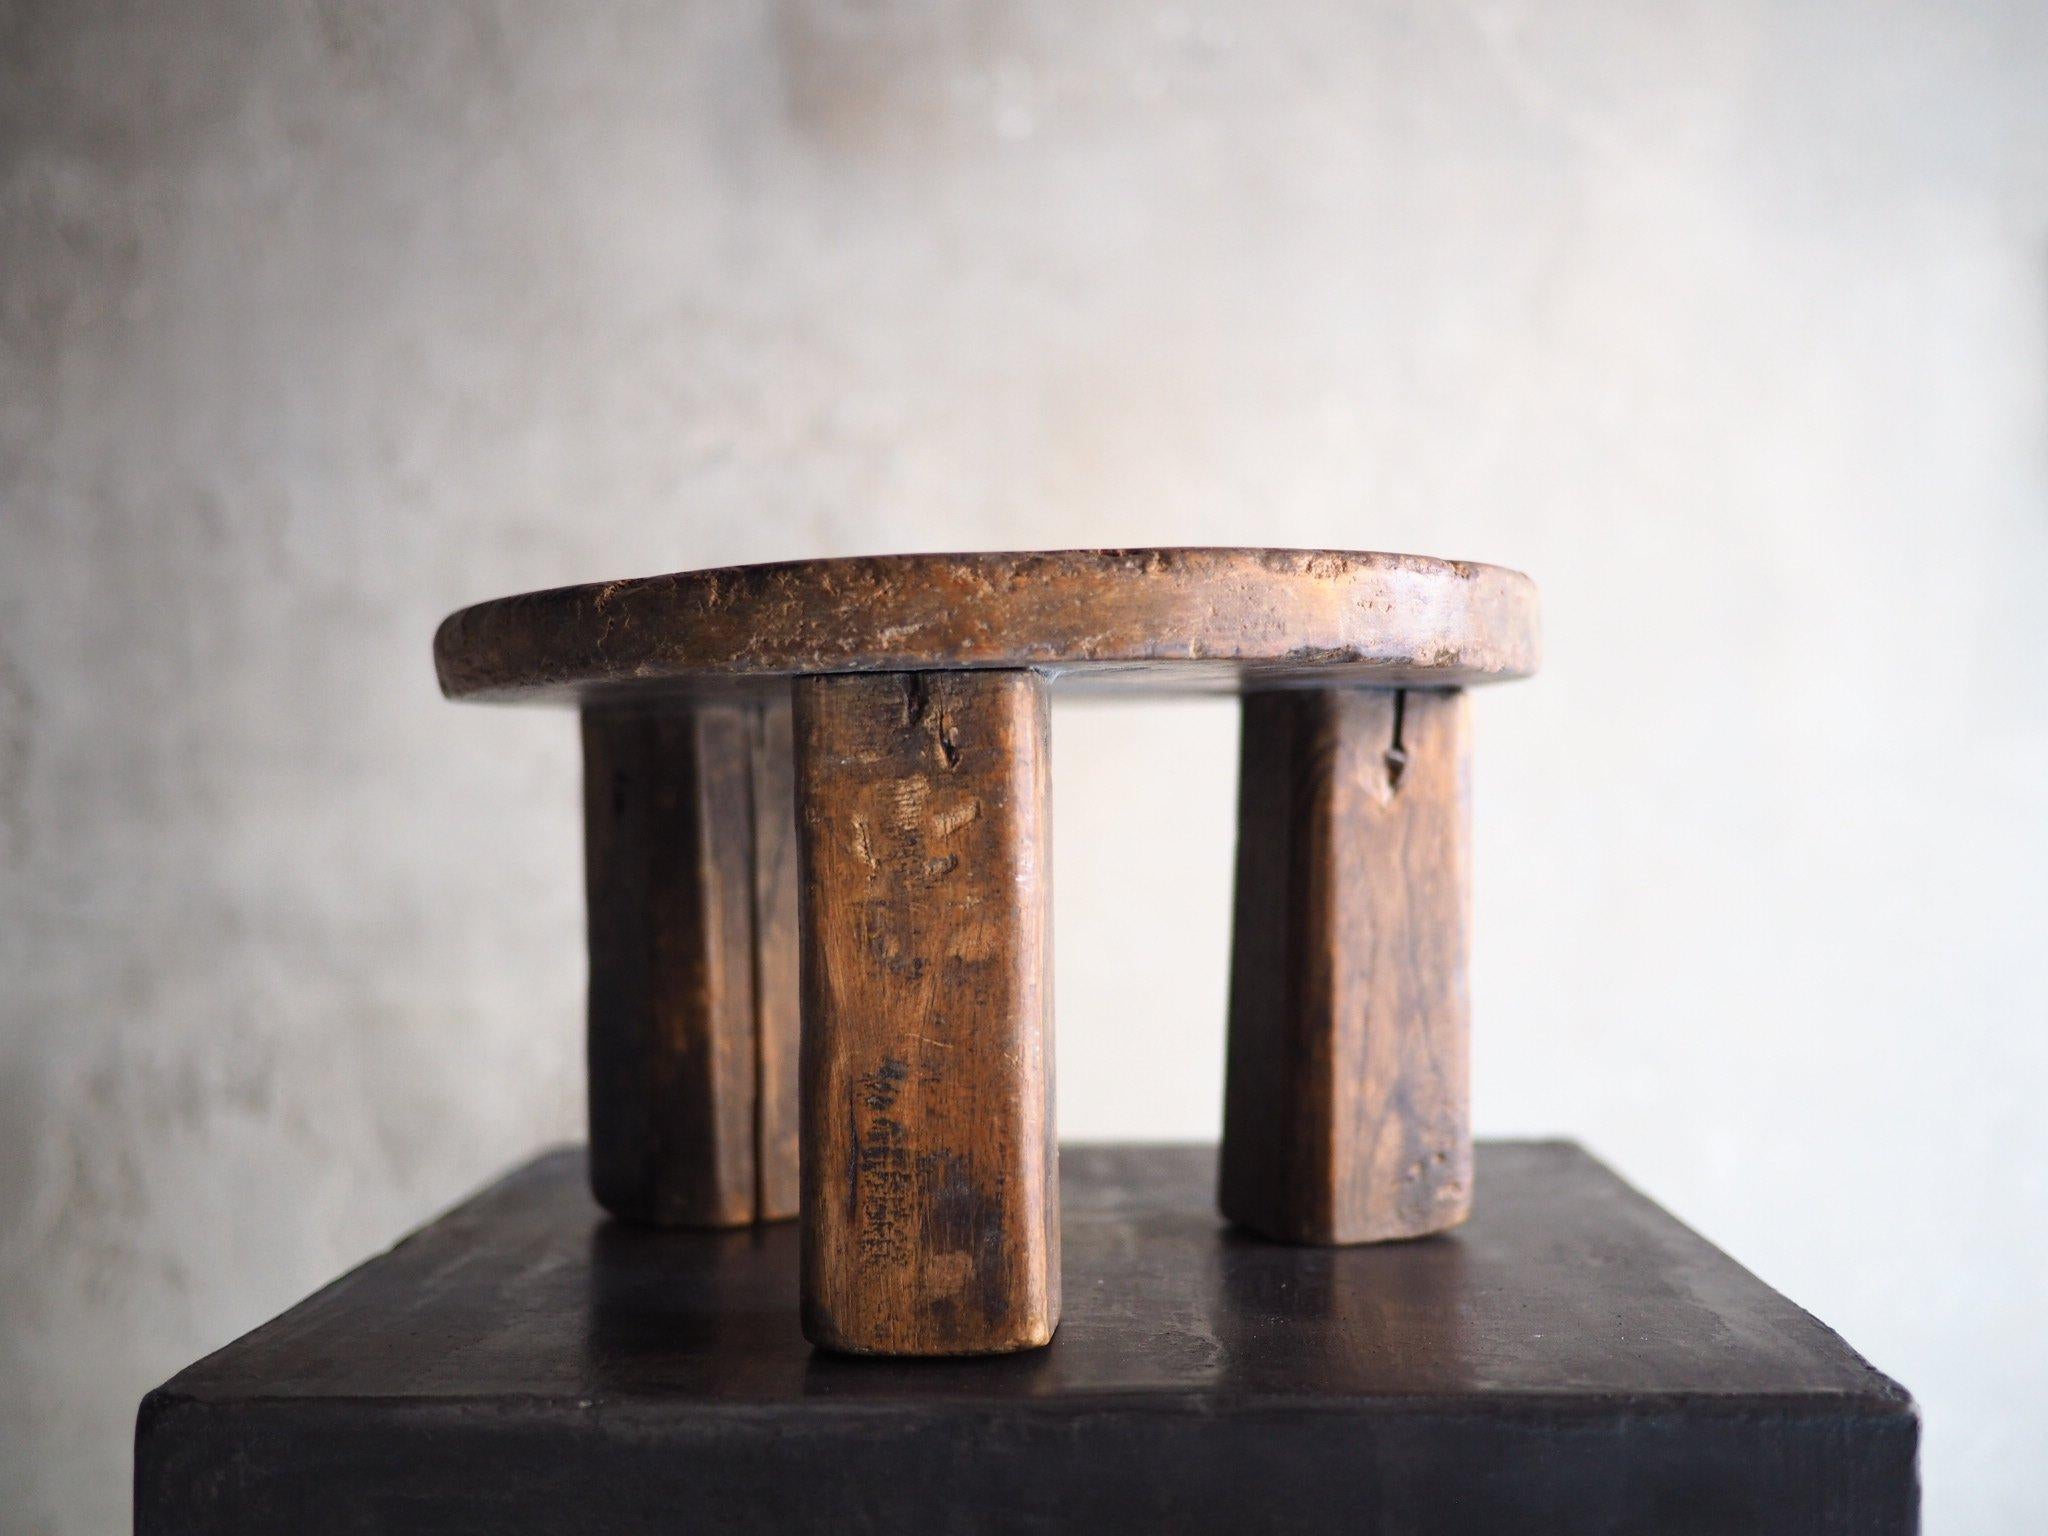 Antique 3 leg wooden stool, c. 1800’s.